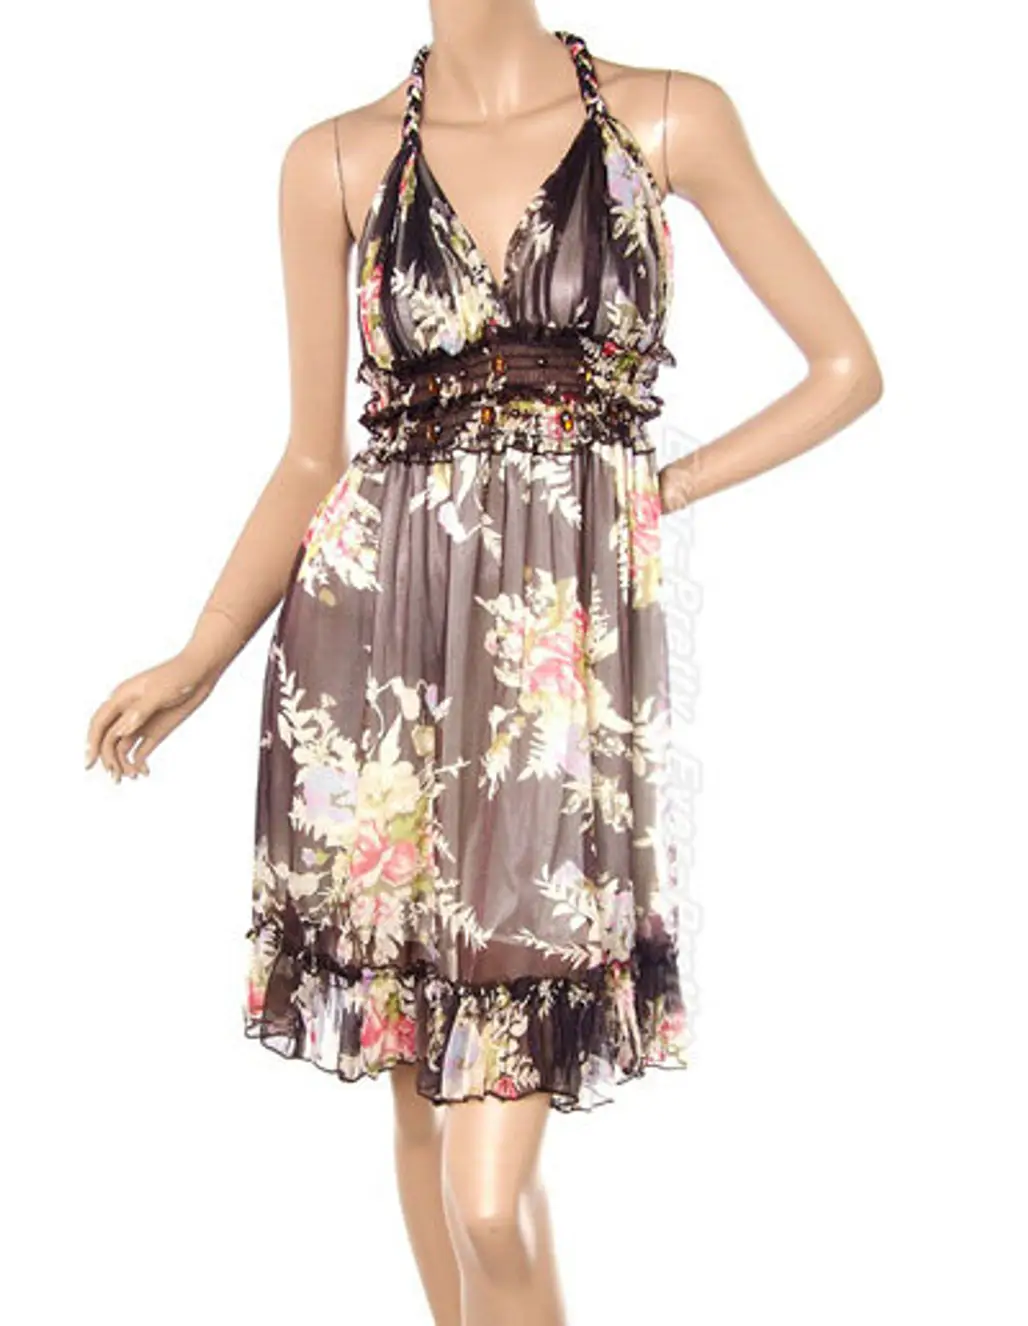 NWT Chic V-shape Flower Print Summer Dress